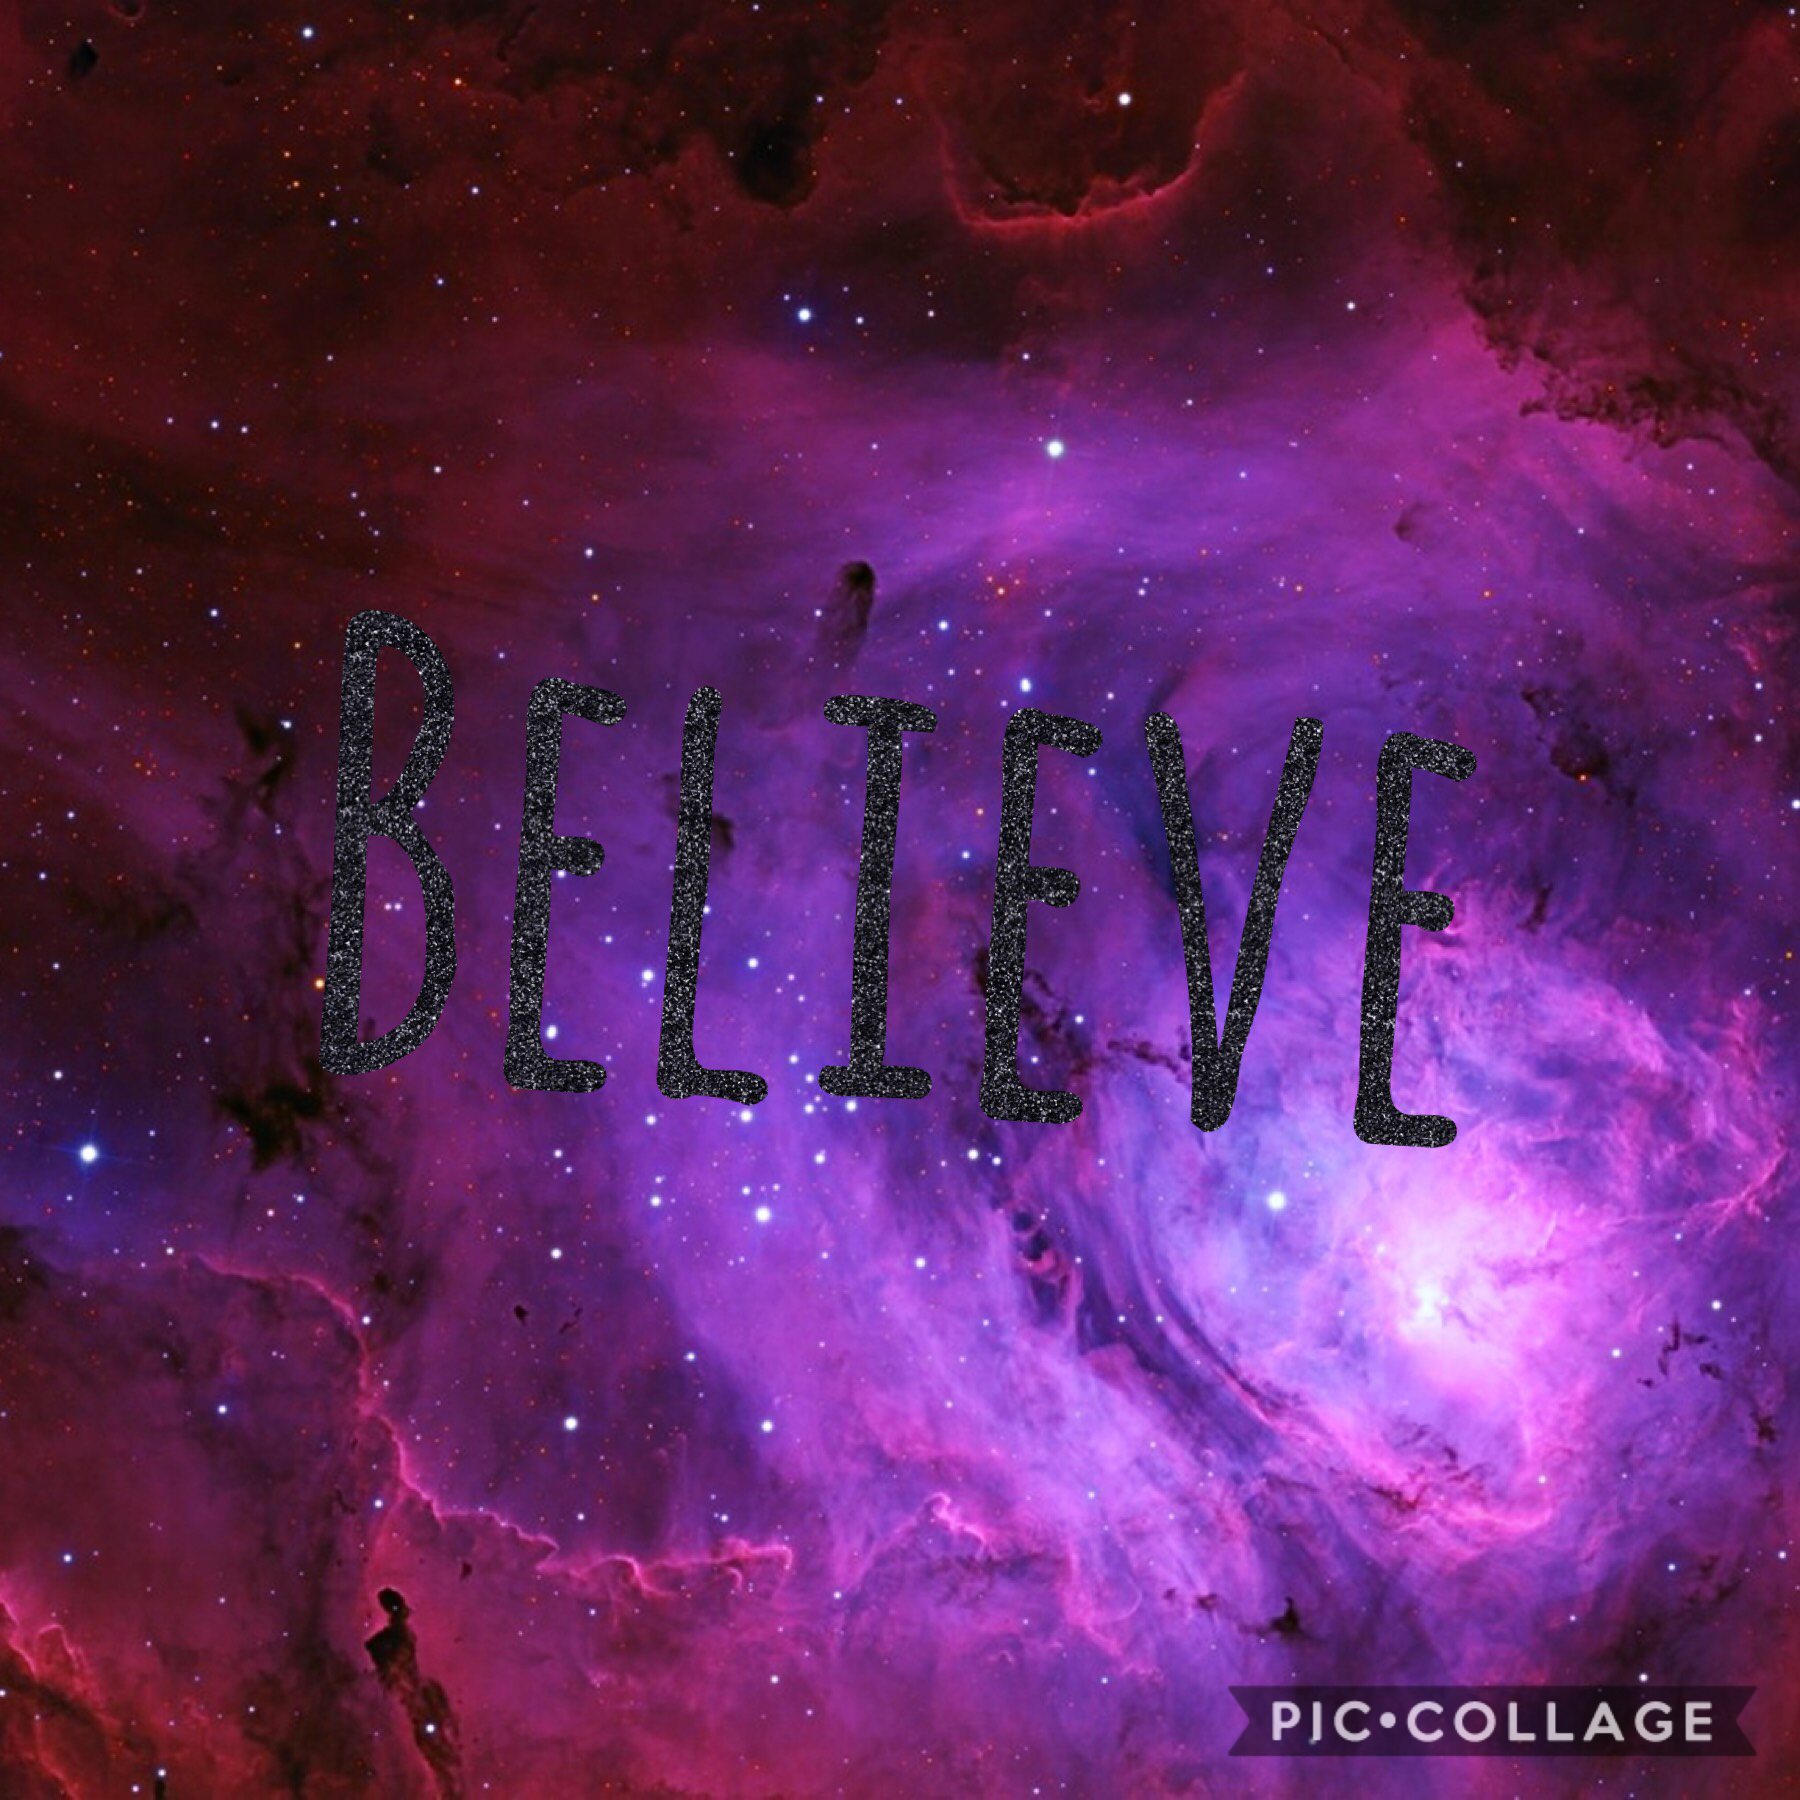 Believe in yourself 
